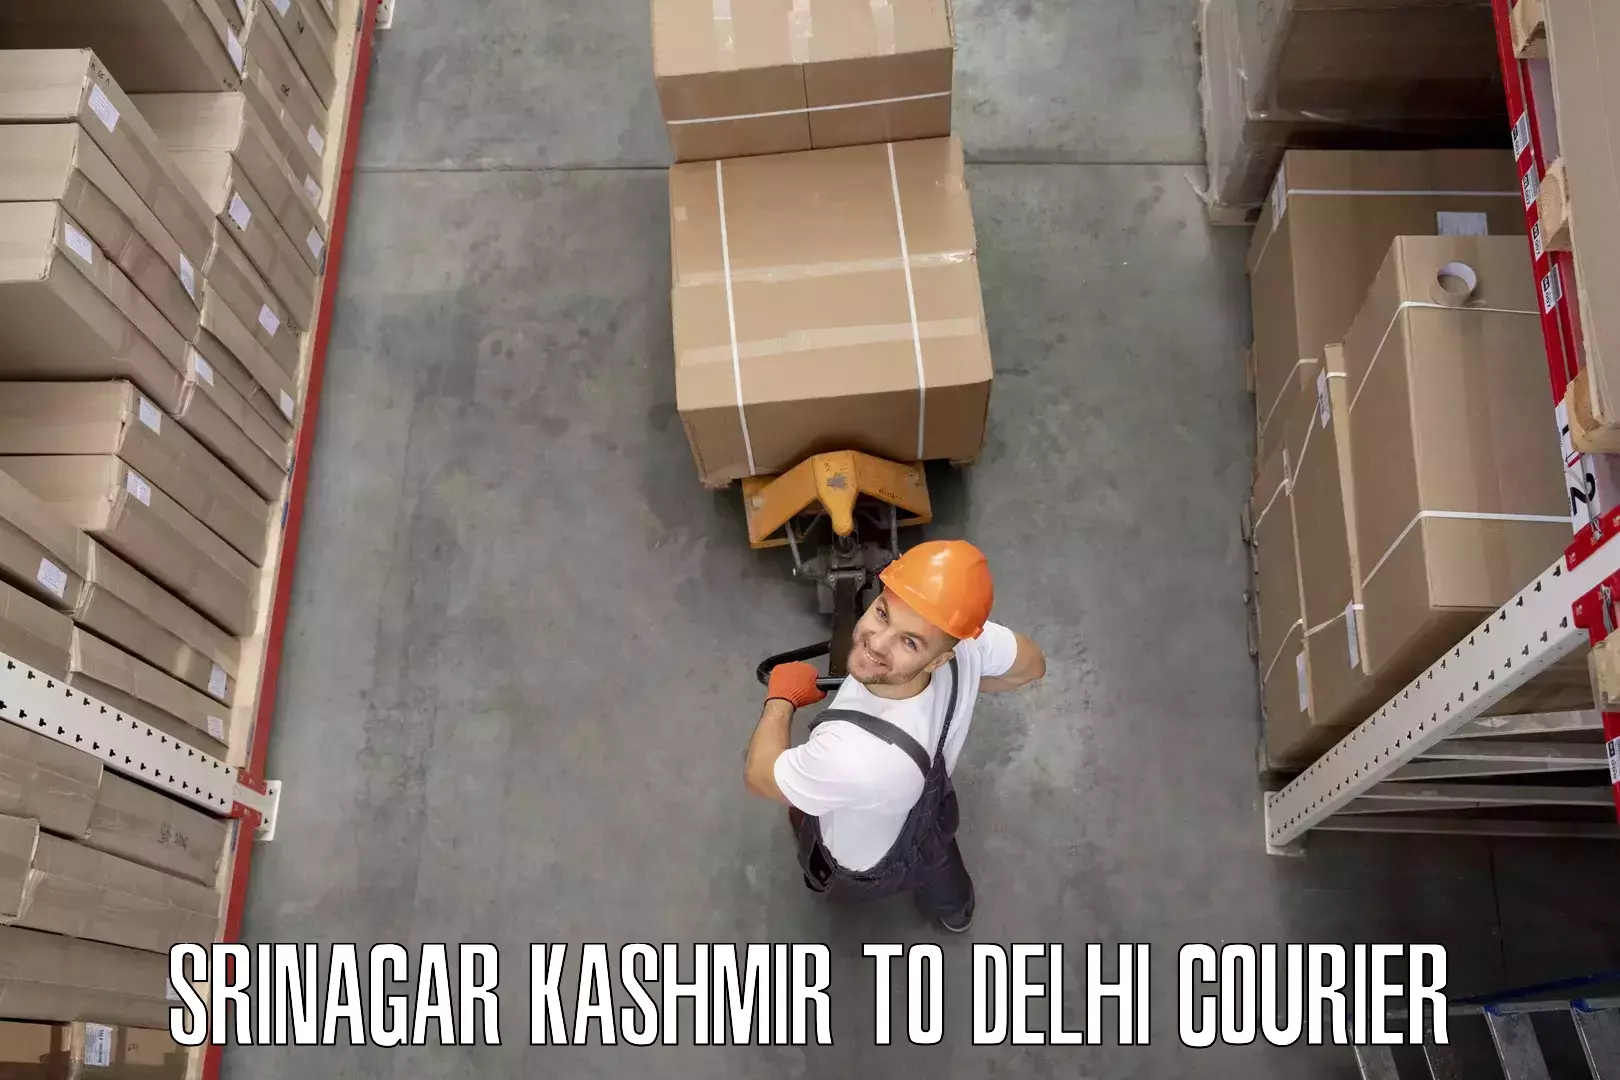 Quality moving company Srinagar Kashmir to Kalkaji